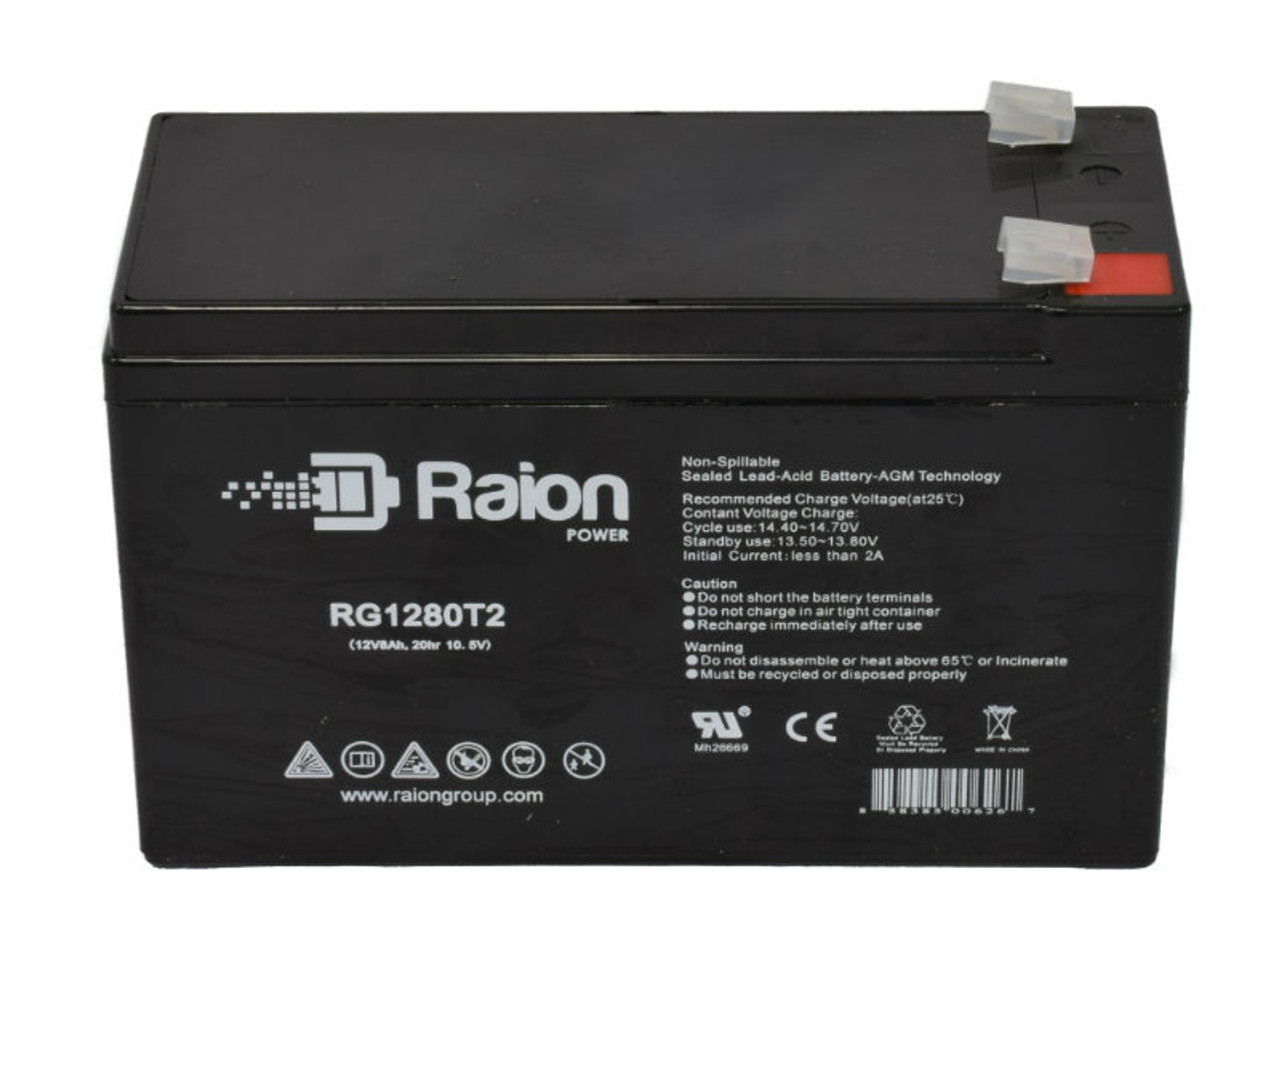 Raion Power Replacement 12V 8Ah Battery for Critikon 7300 Cardiac Output Computer